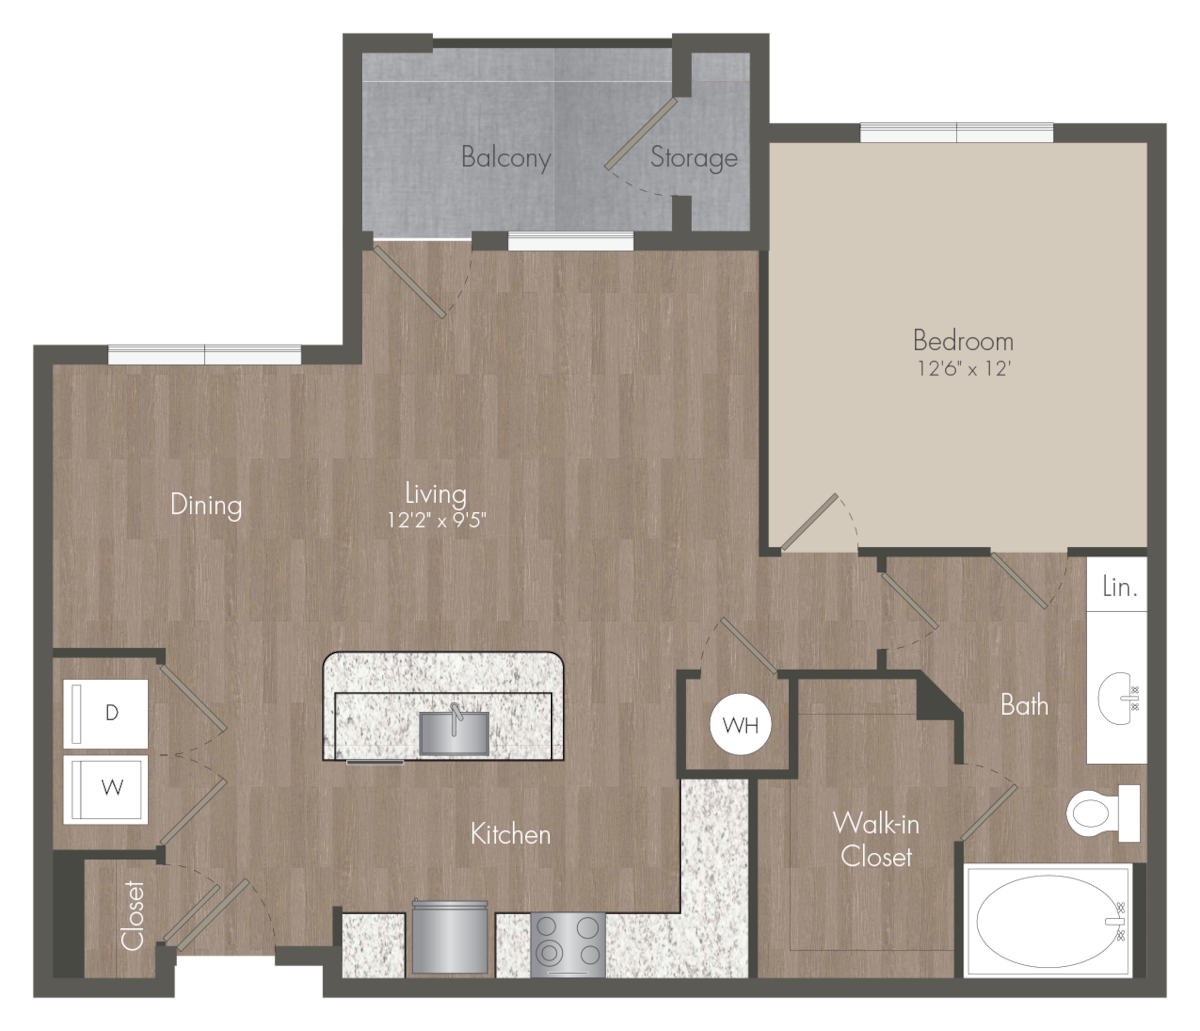 Floorplan diagram for A3 - 1x1, showing 1 bedroom